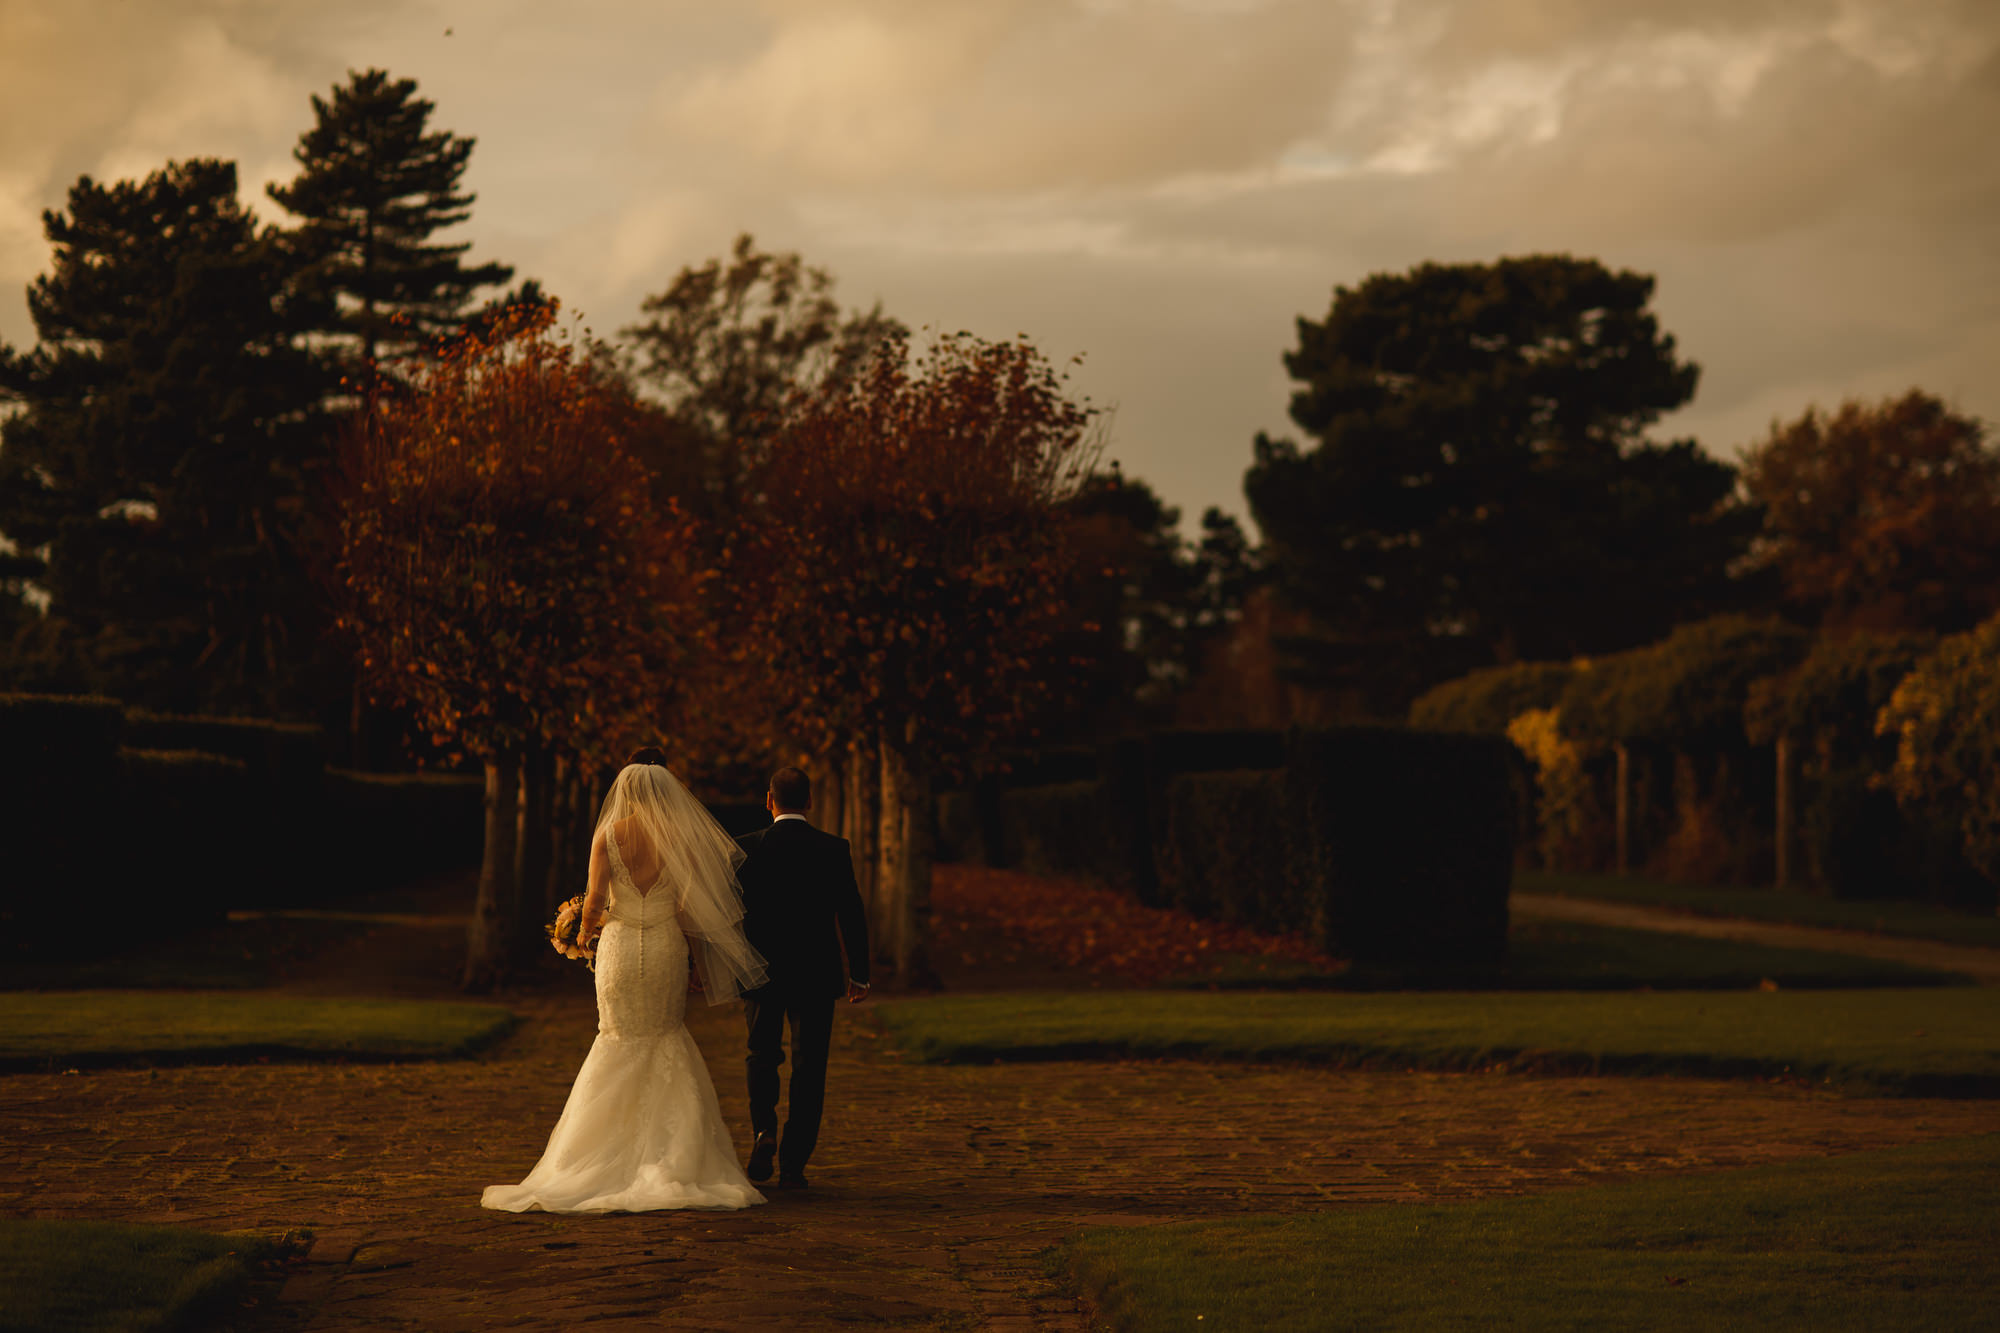 Thornton manor wedding photographer - arj photography